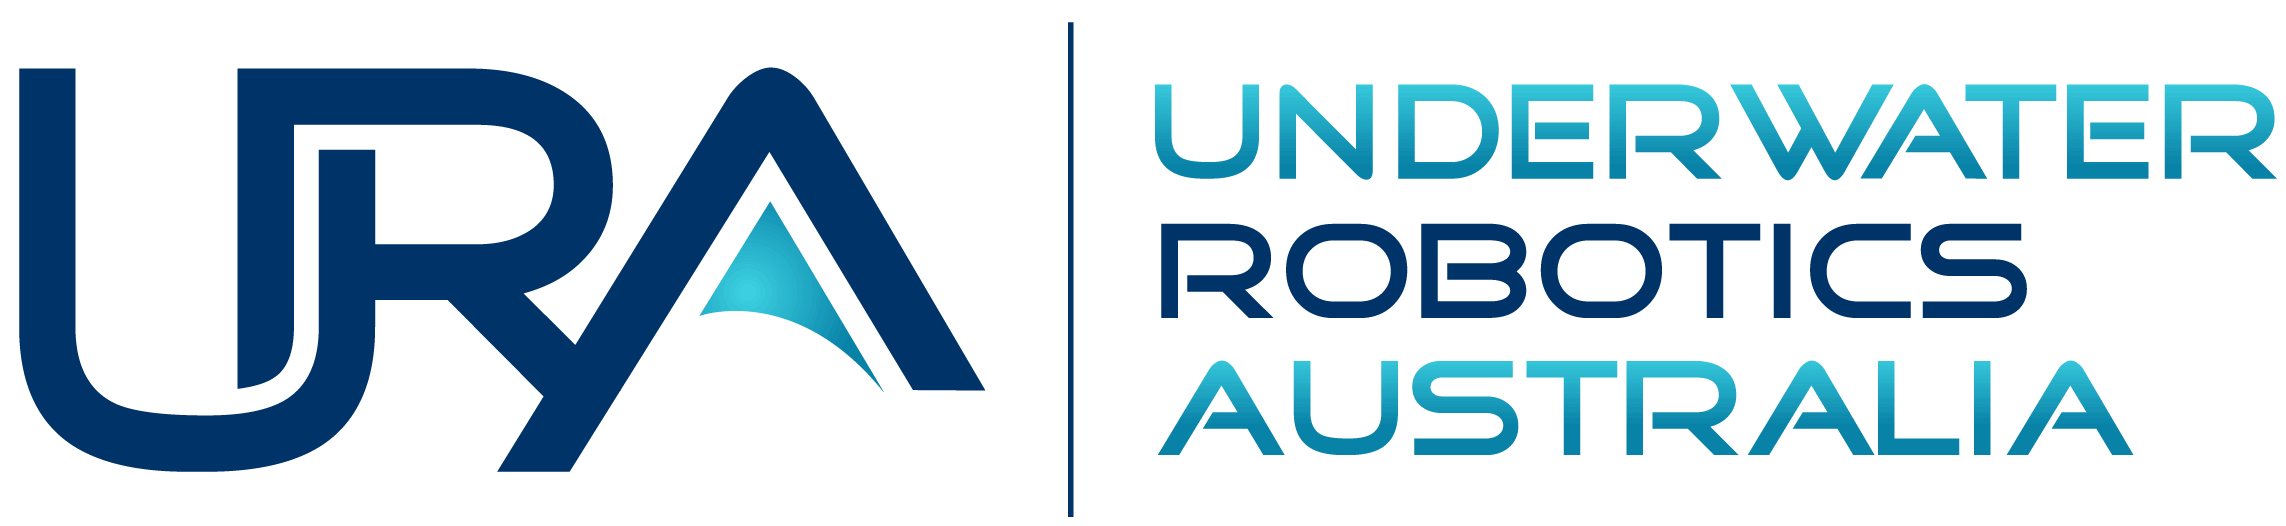 Underwater Robotics Australia